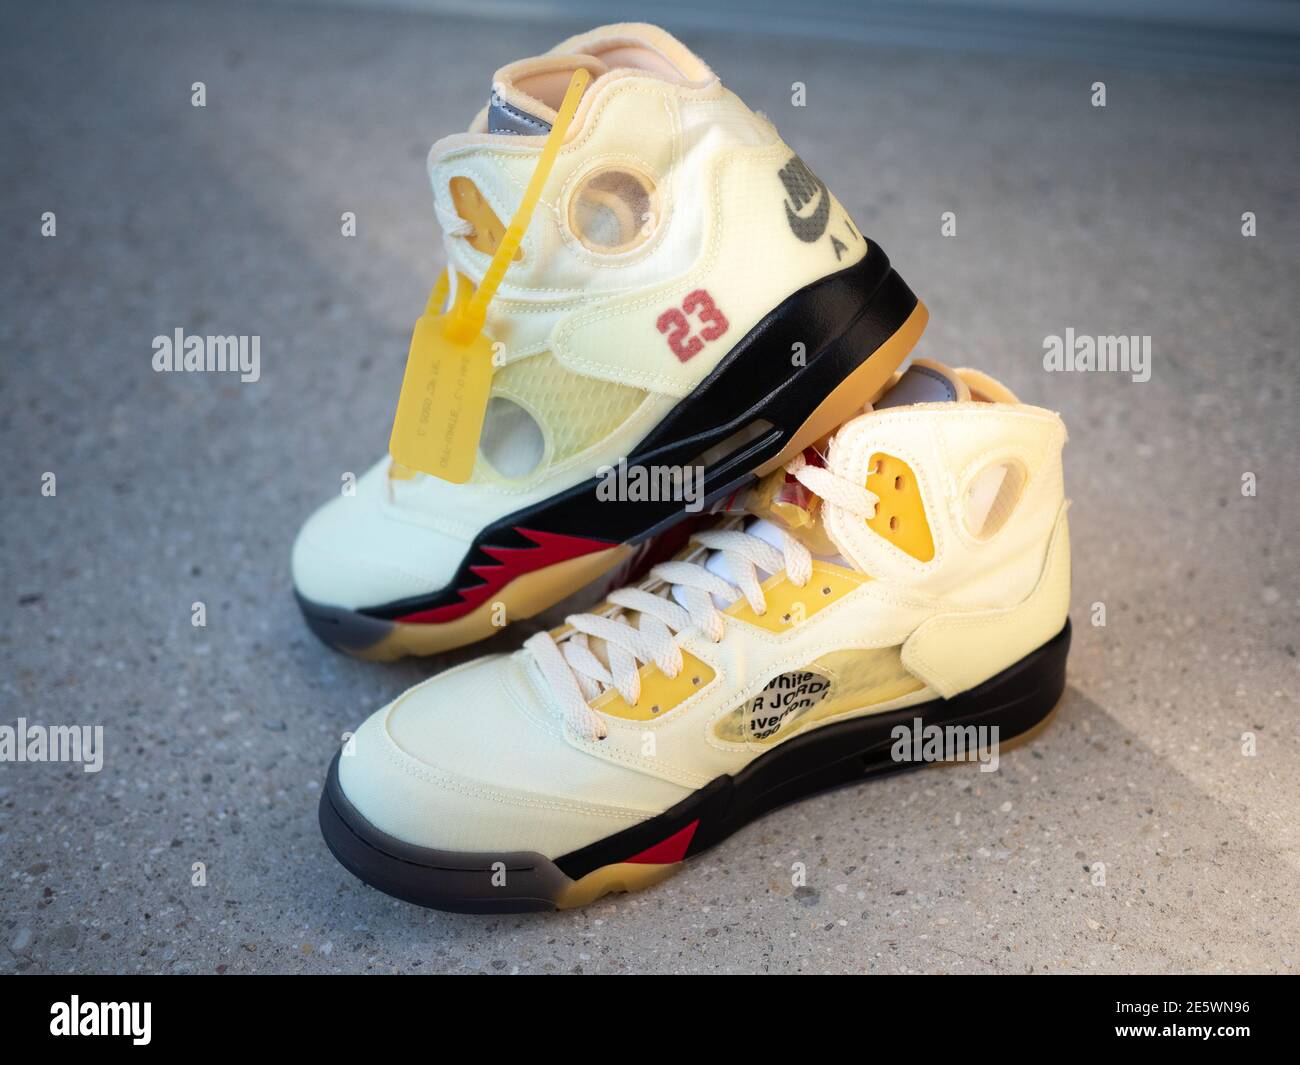 Nike Air Jordan Fotos e Imágenes de stock - Alamy